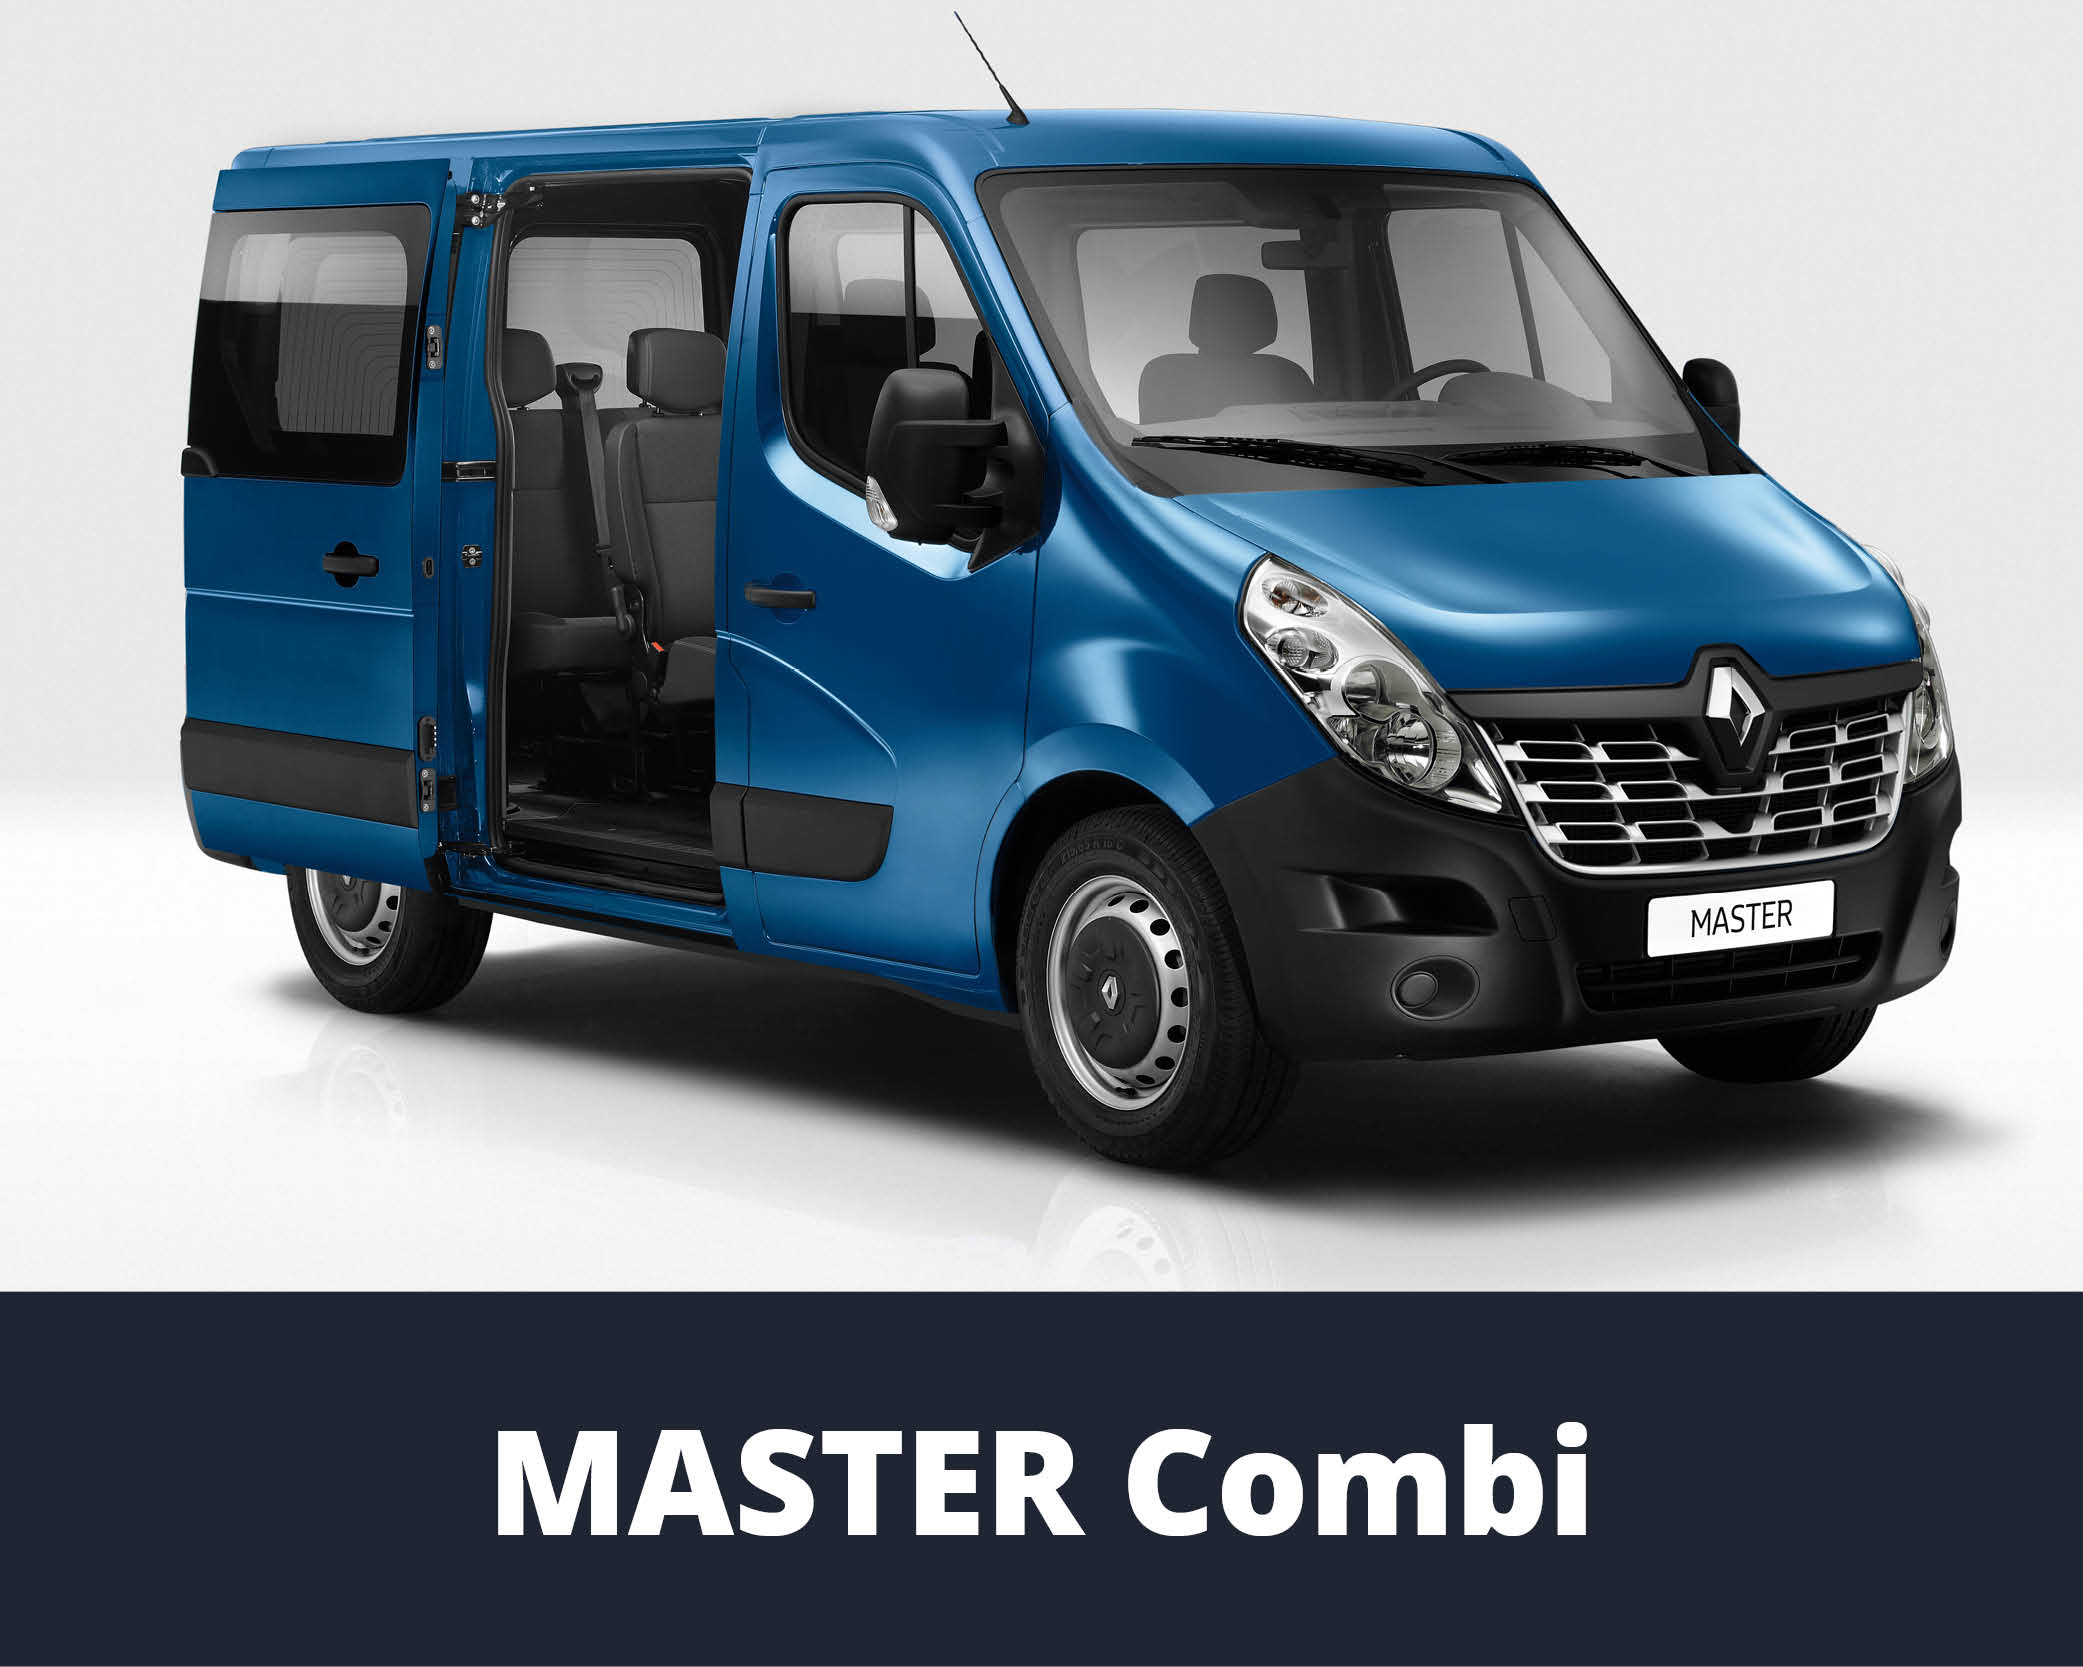 Renault Master Combi